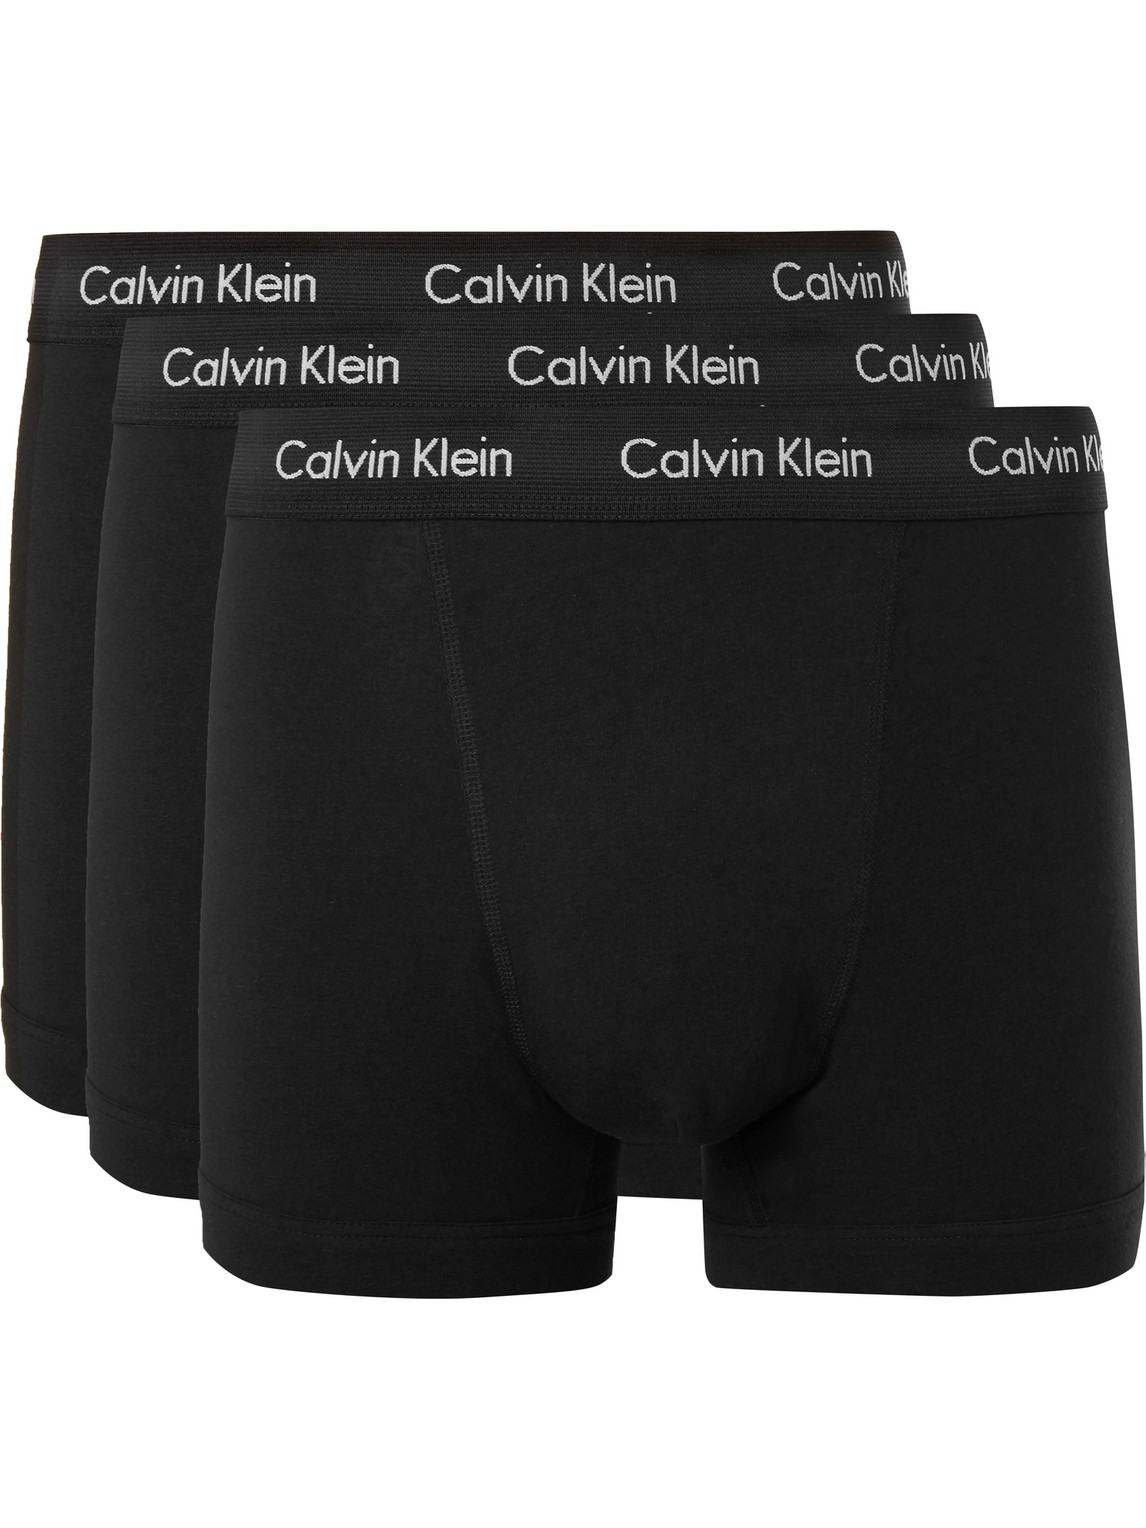 新入荷 Calvin Klein Boxer Brief 